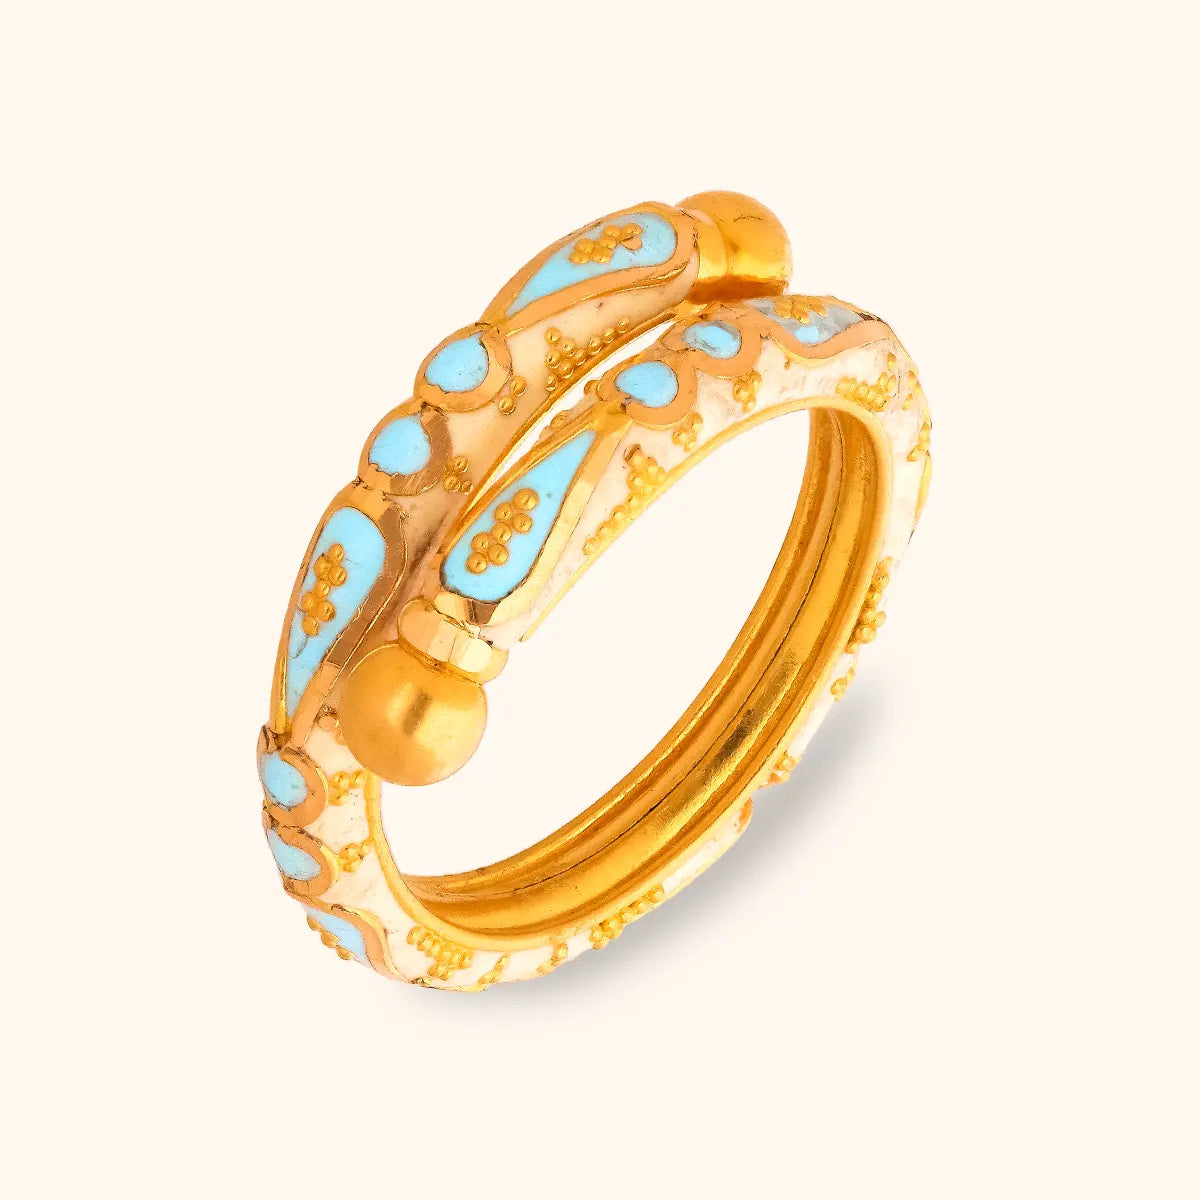 3 gram gold ring price 2023 - YouTube